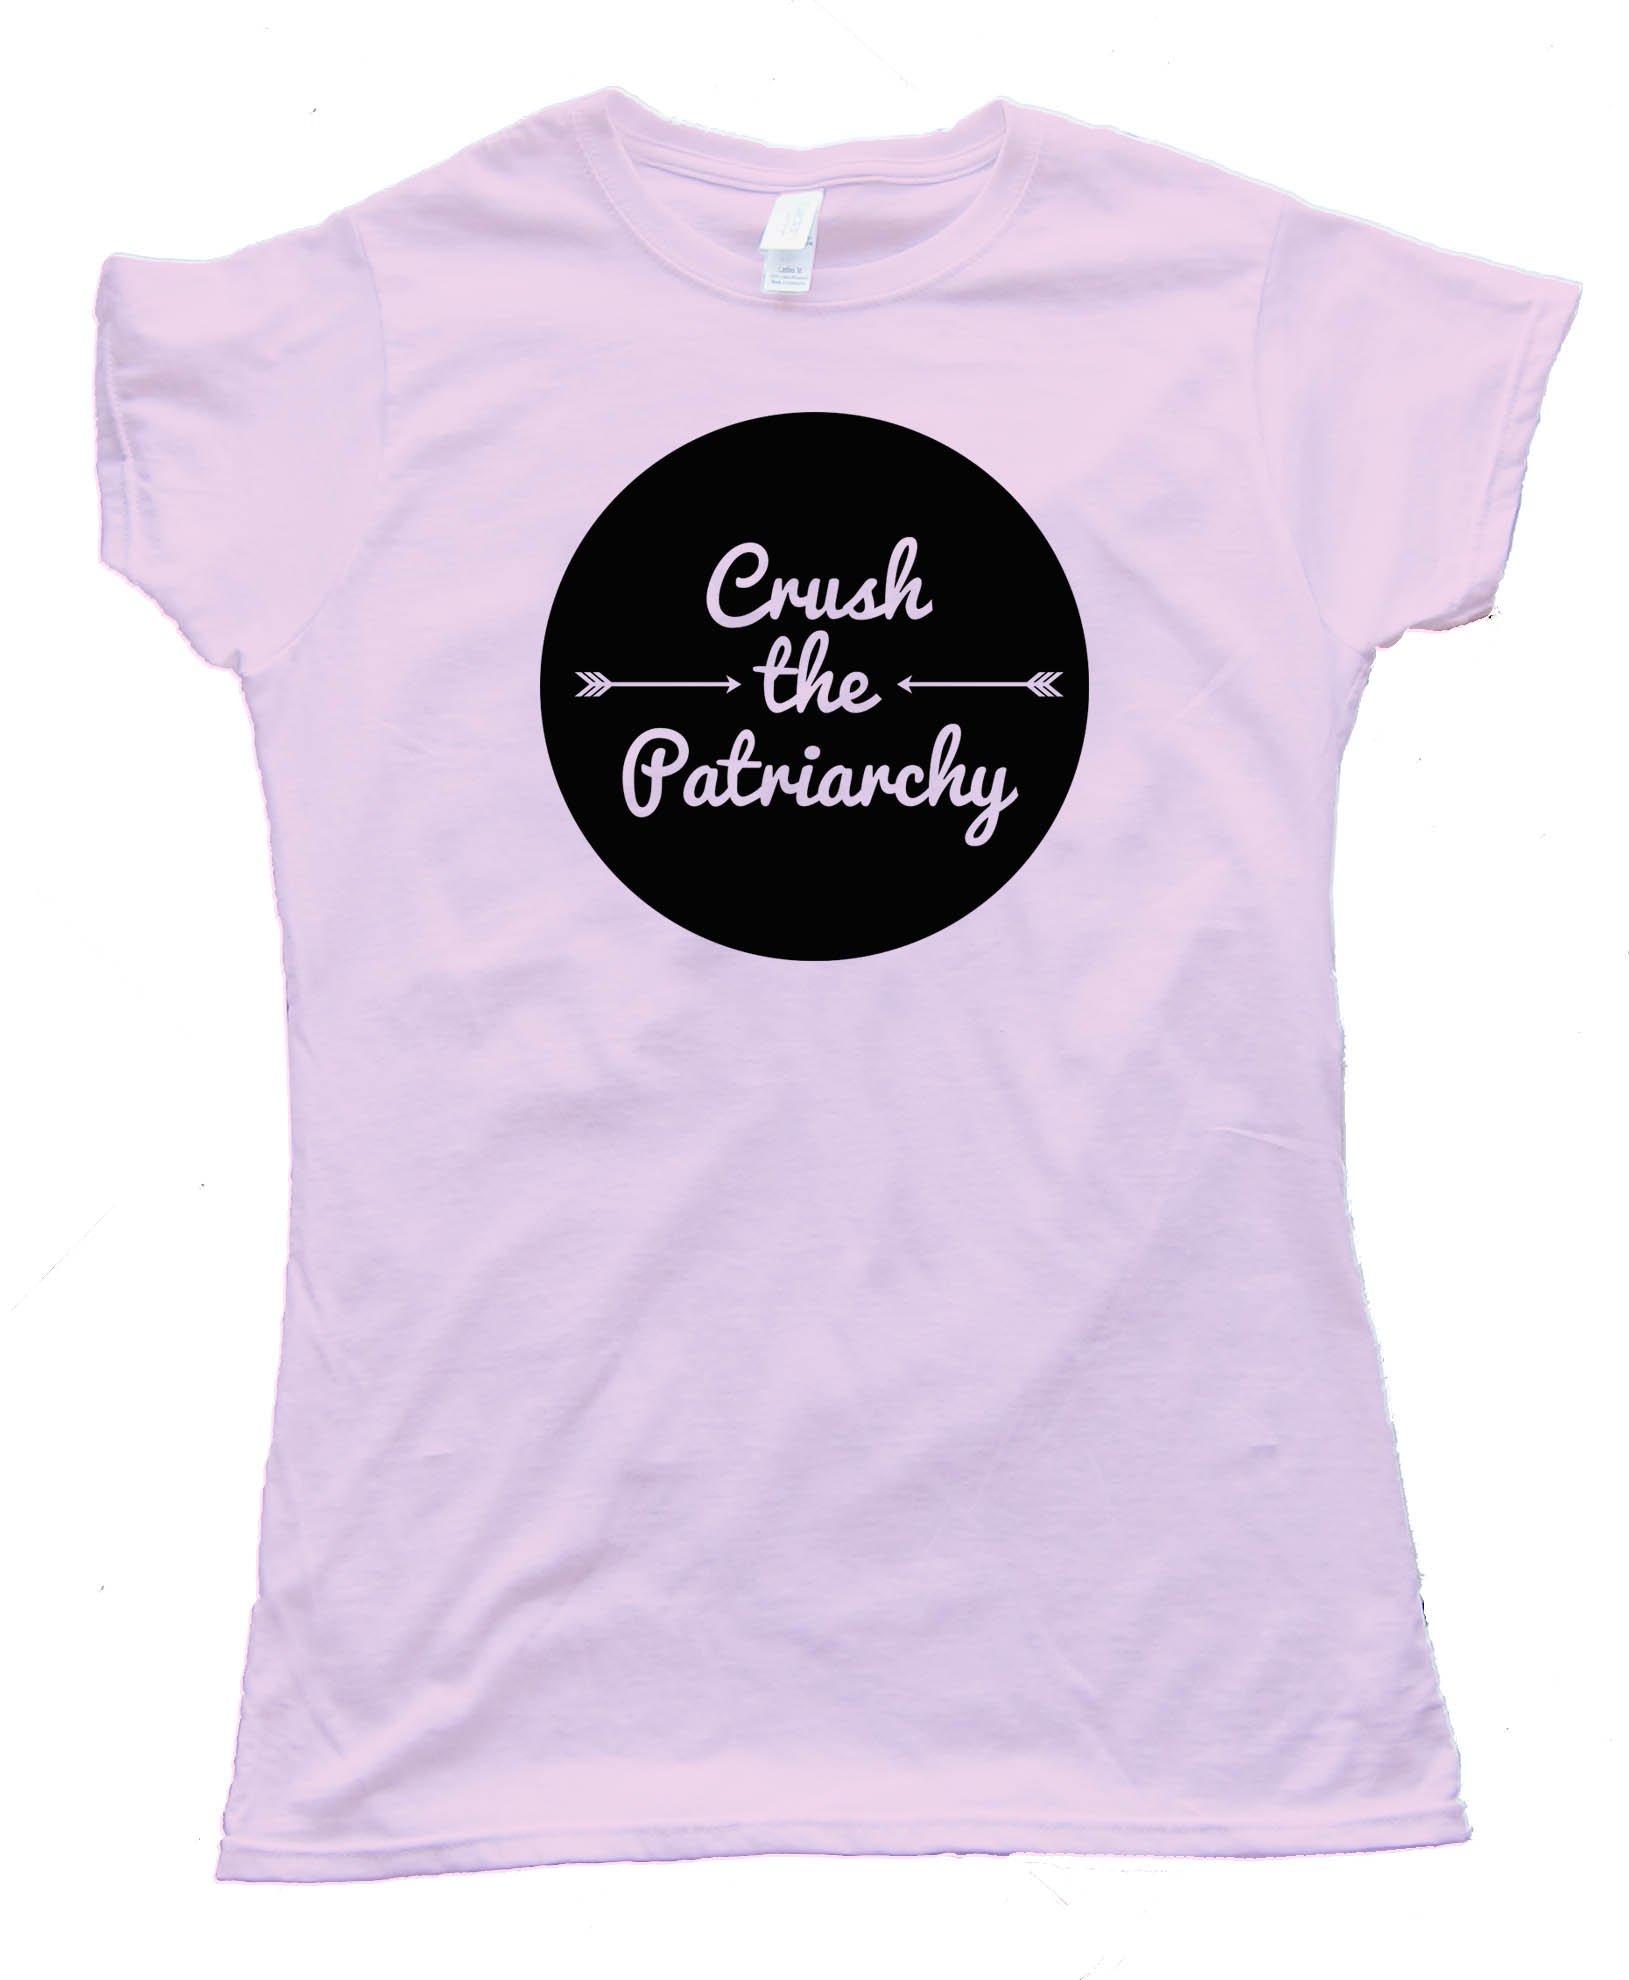 Womens Crush The Patriarchy - Tee Shirt